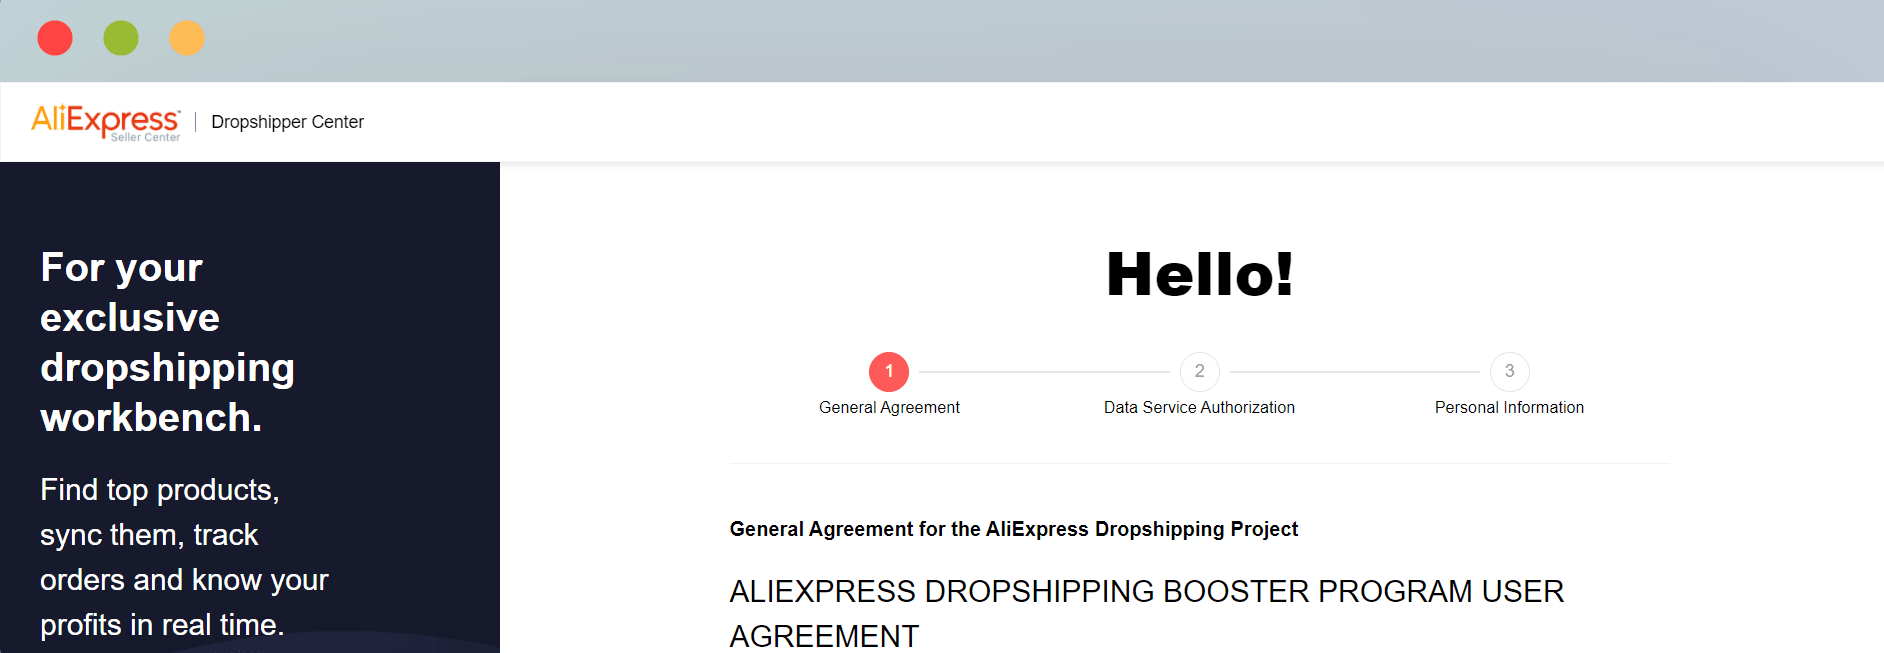 AliExpress dropshipping center